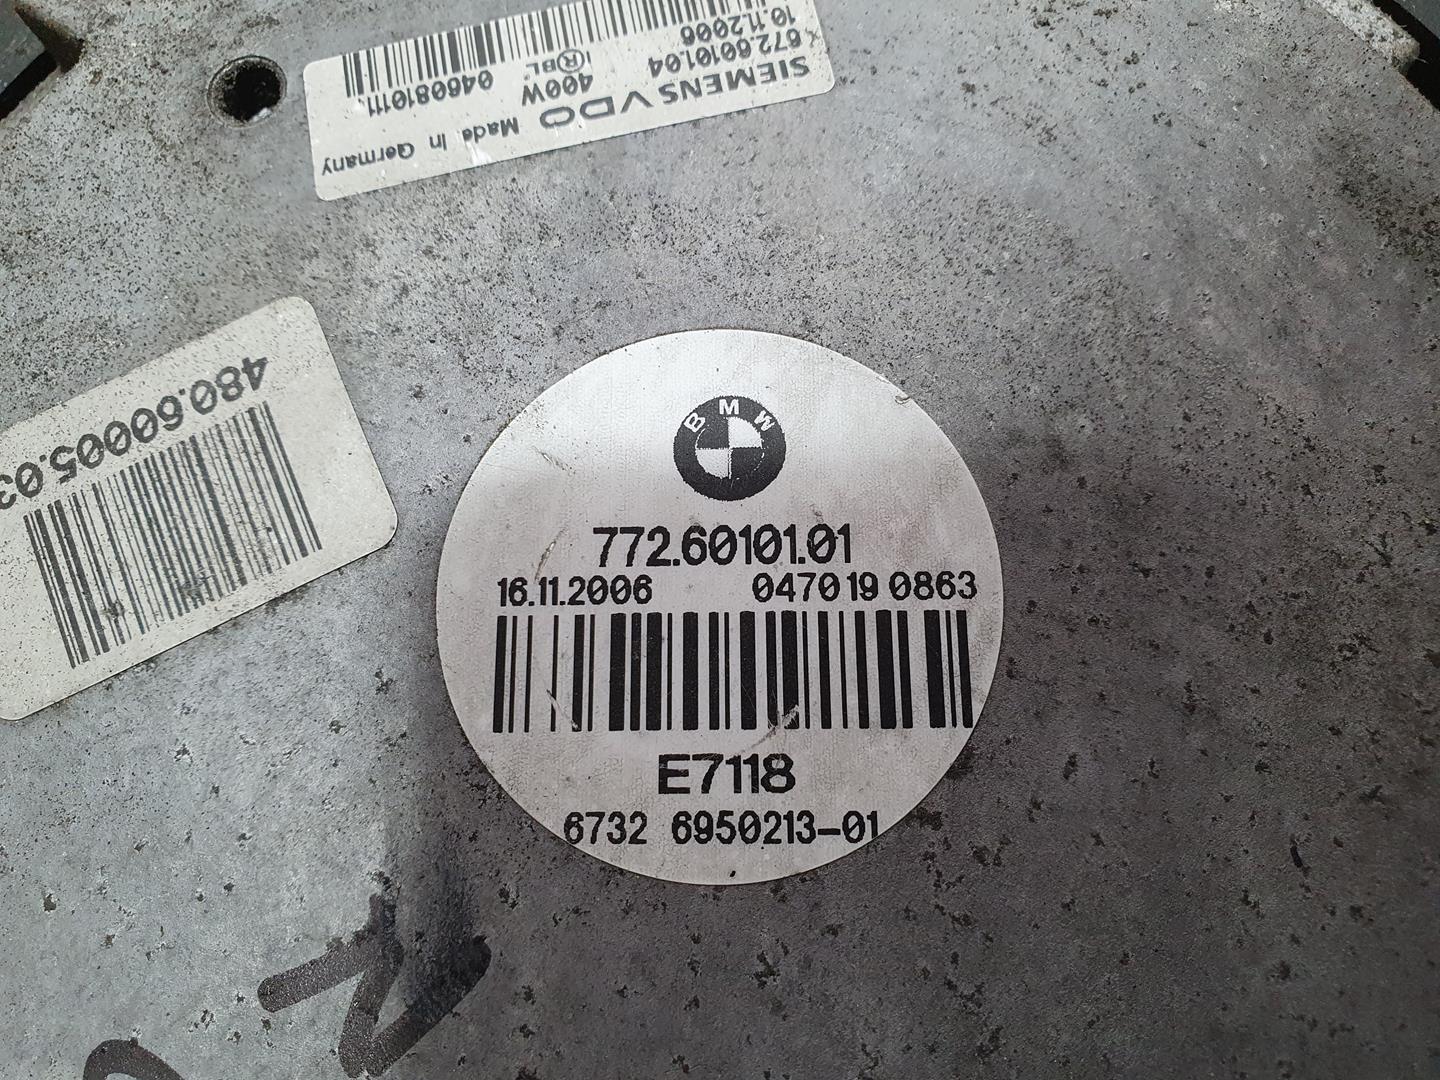 BMW 5 Series E60/E61 (2003-2010) Вентилятор диффузора 7726010101, 6726010104, SIEMENSVDO 23657330